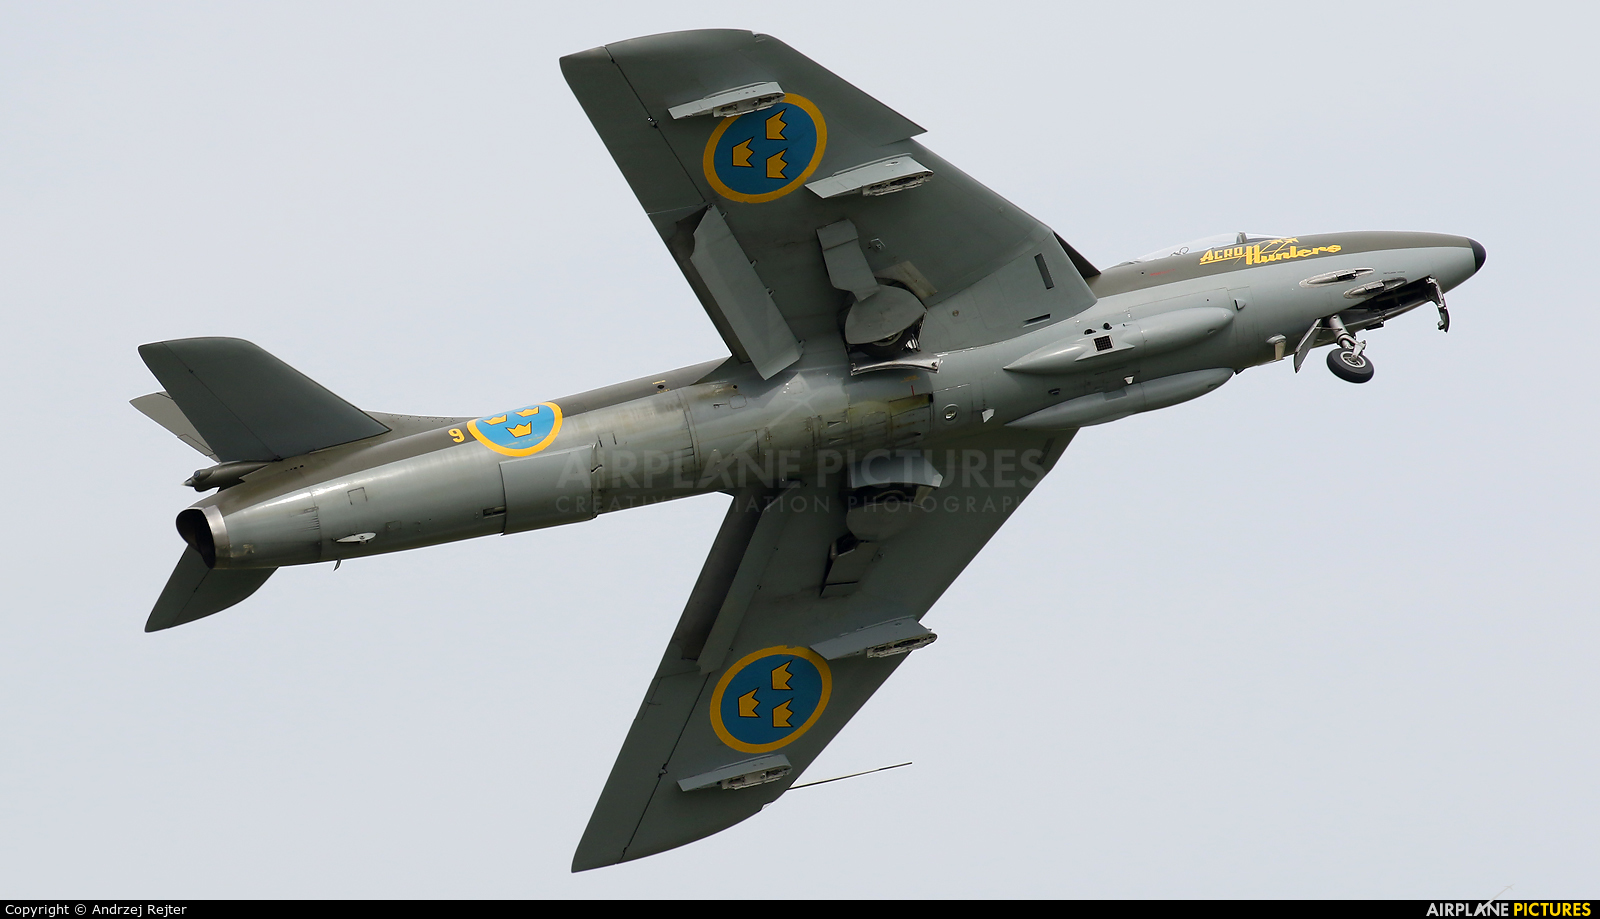 Swedish Air Force Historic Flight SE-DXM aircraft at Gdynia- Babie Doły (Oksywie)